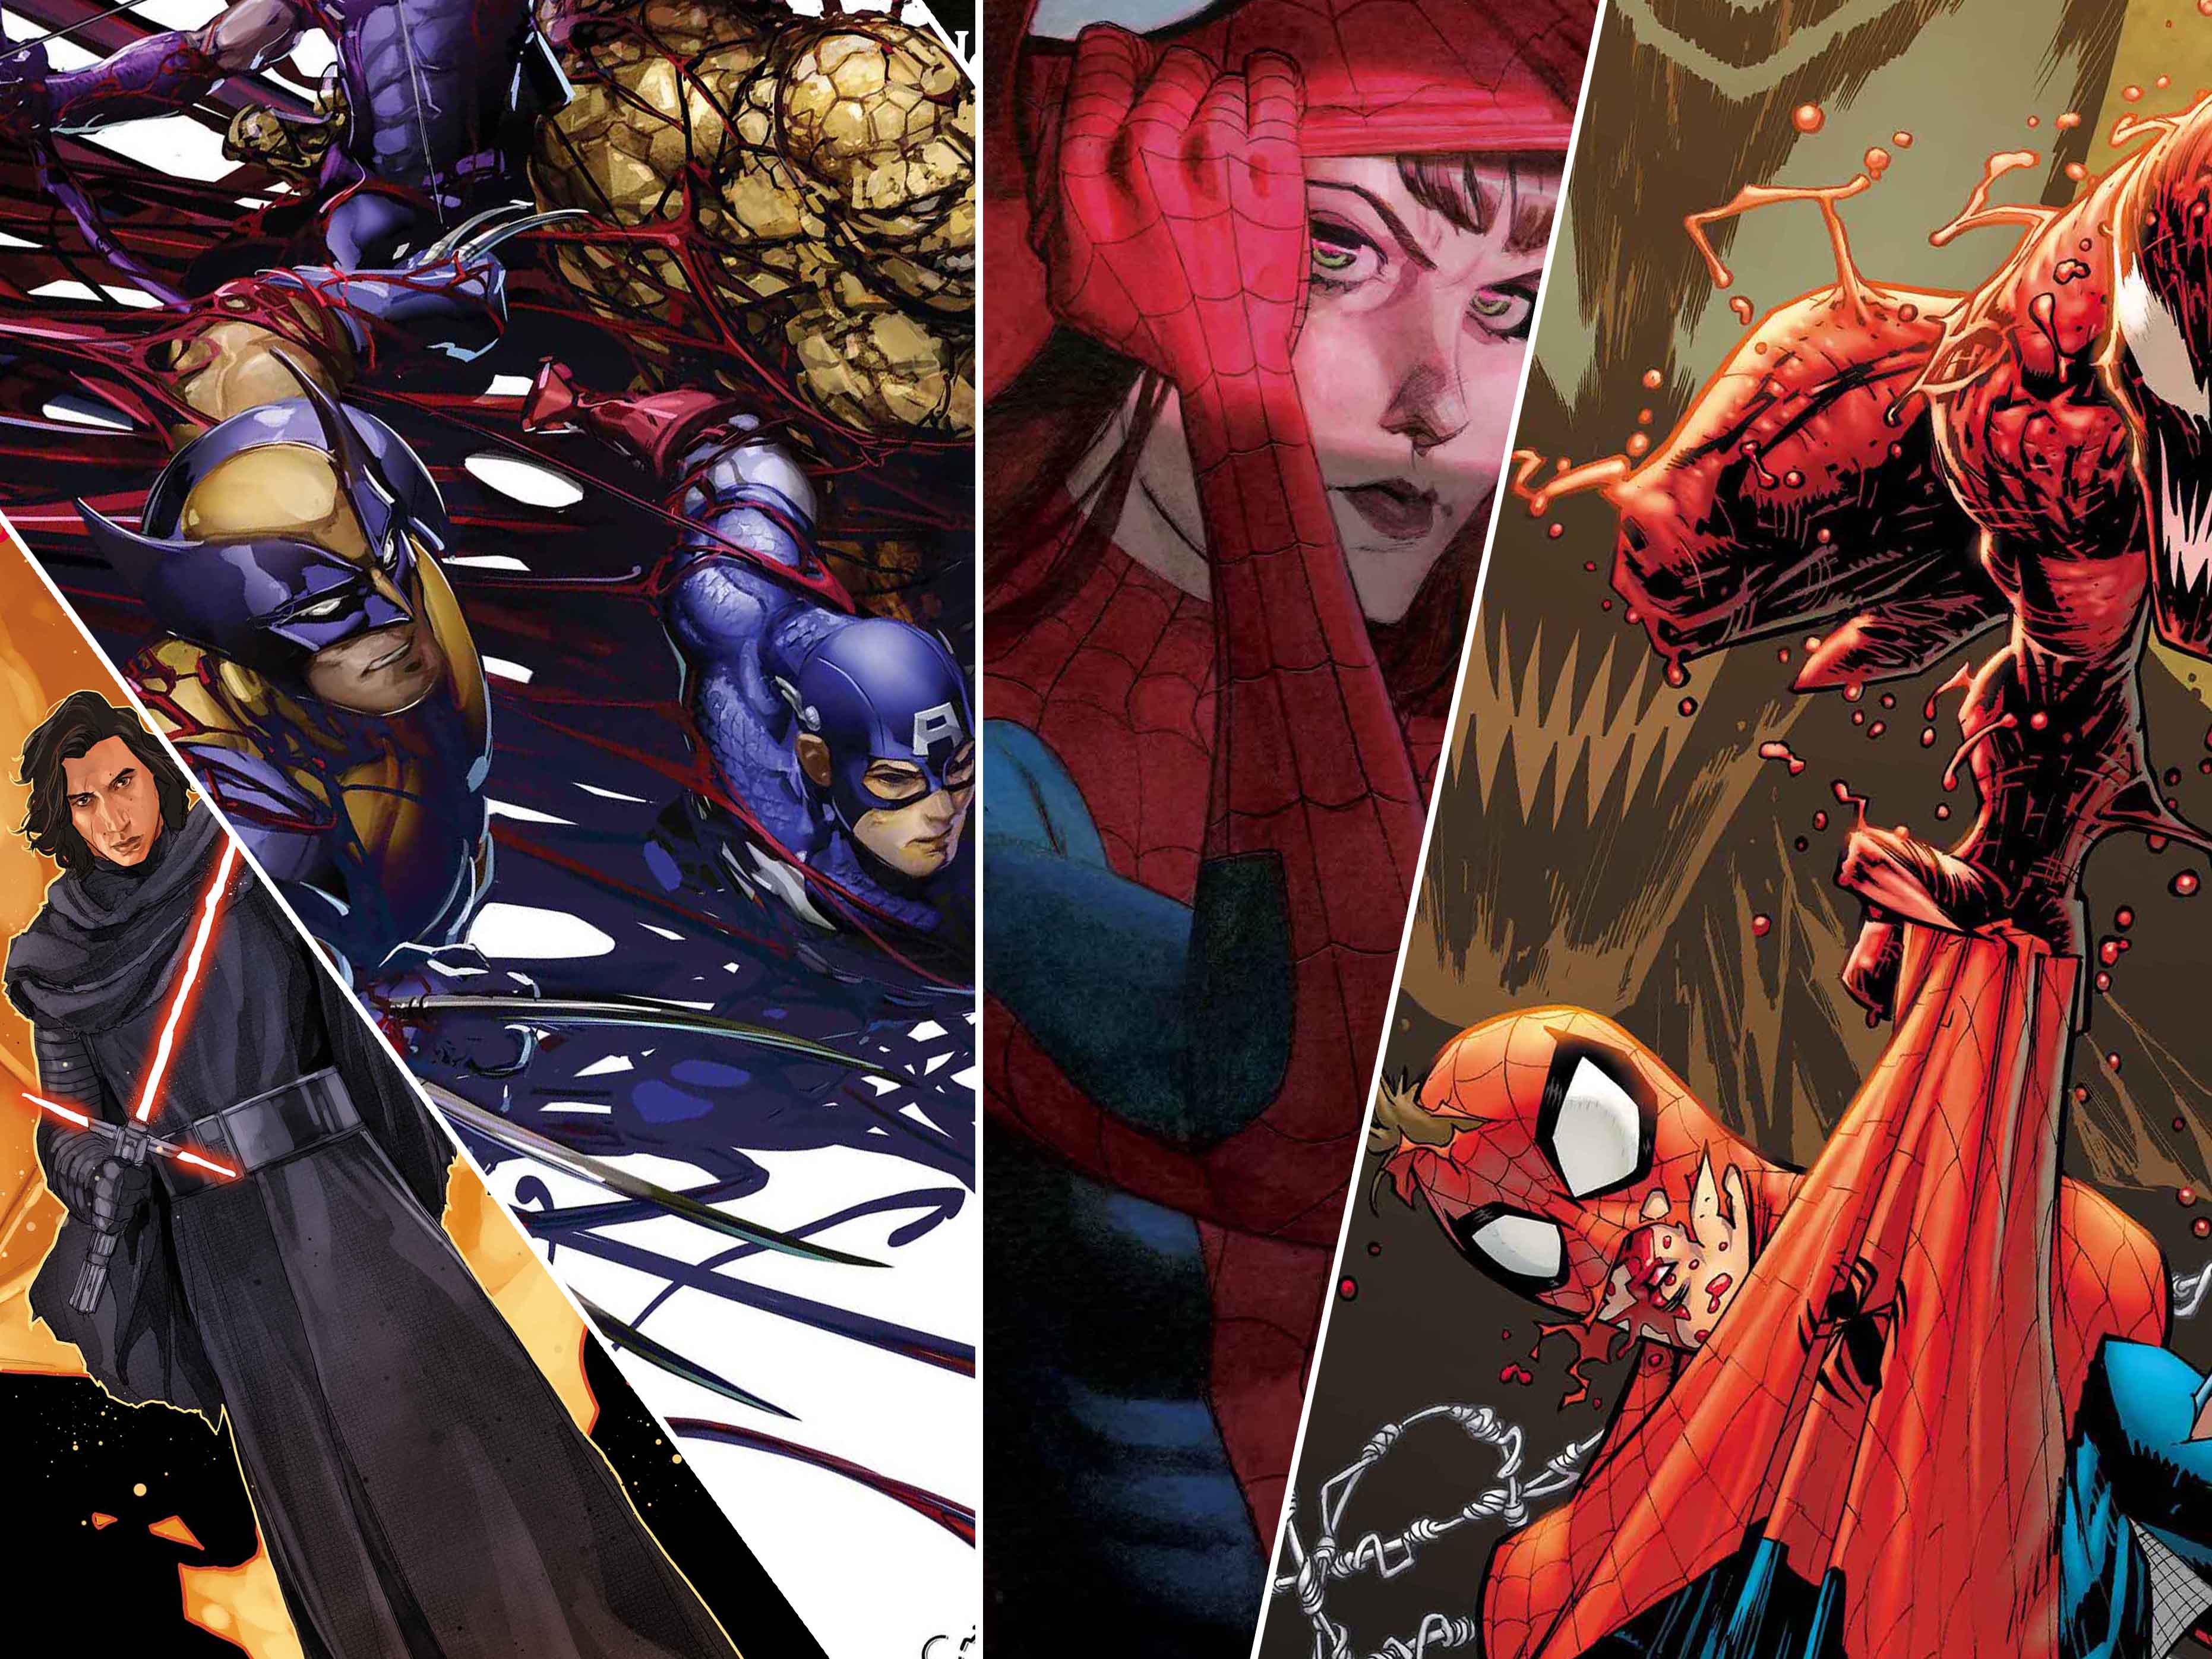 6 big takeaways from Marvel Comics' September 2019 solicitations